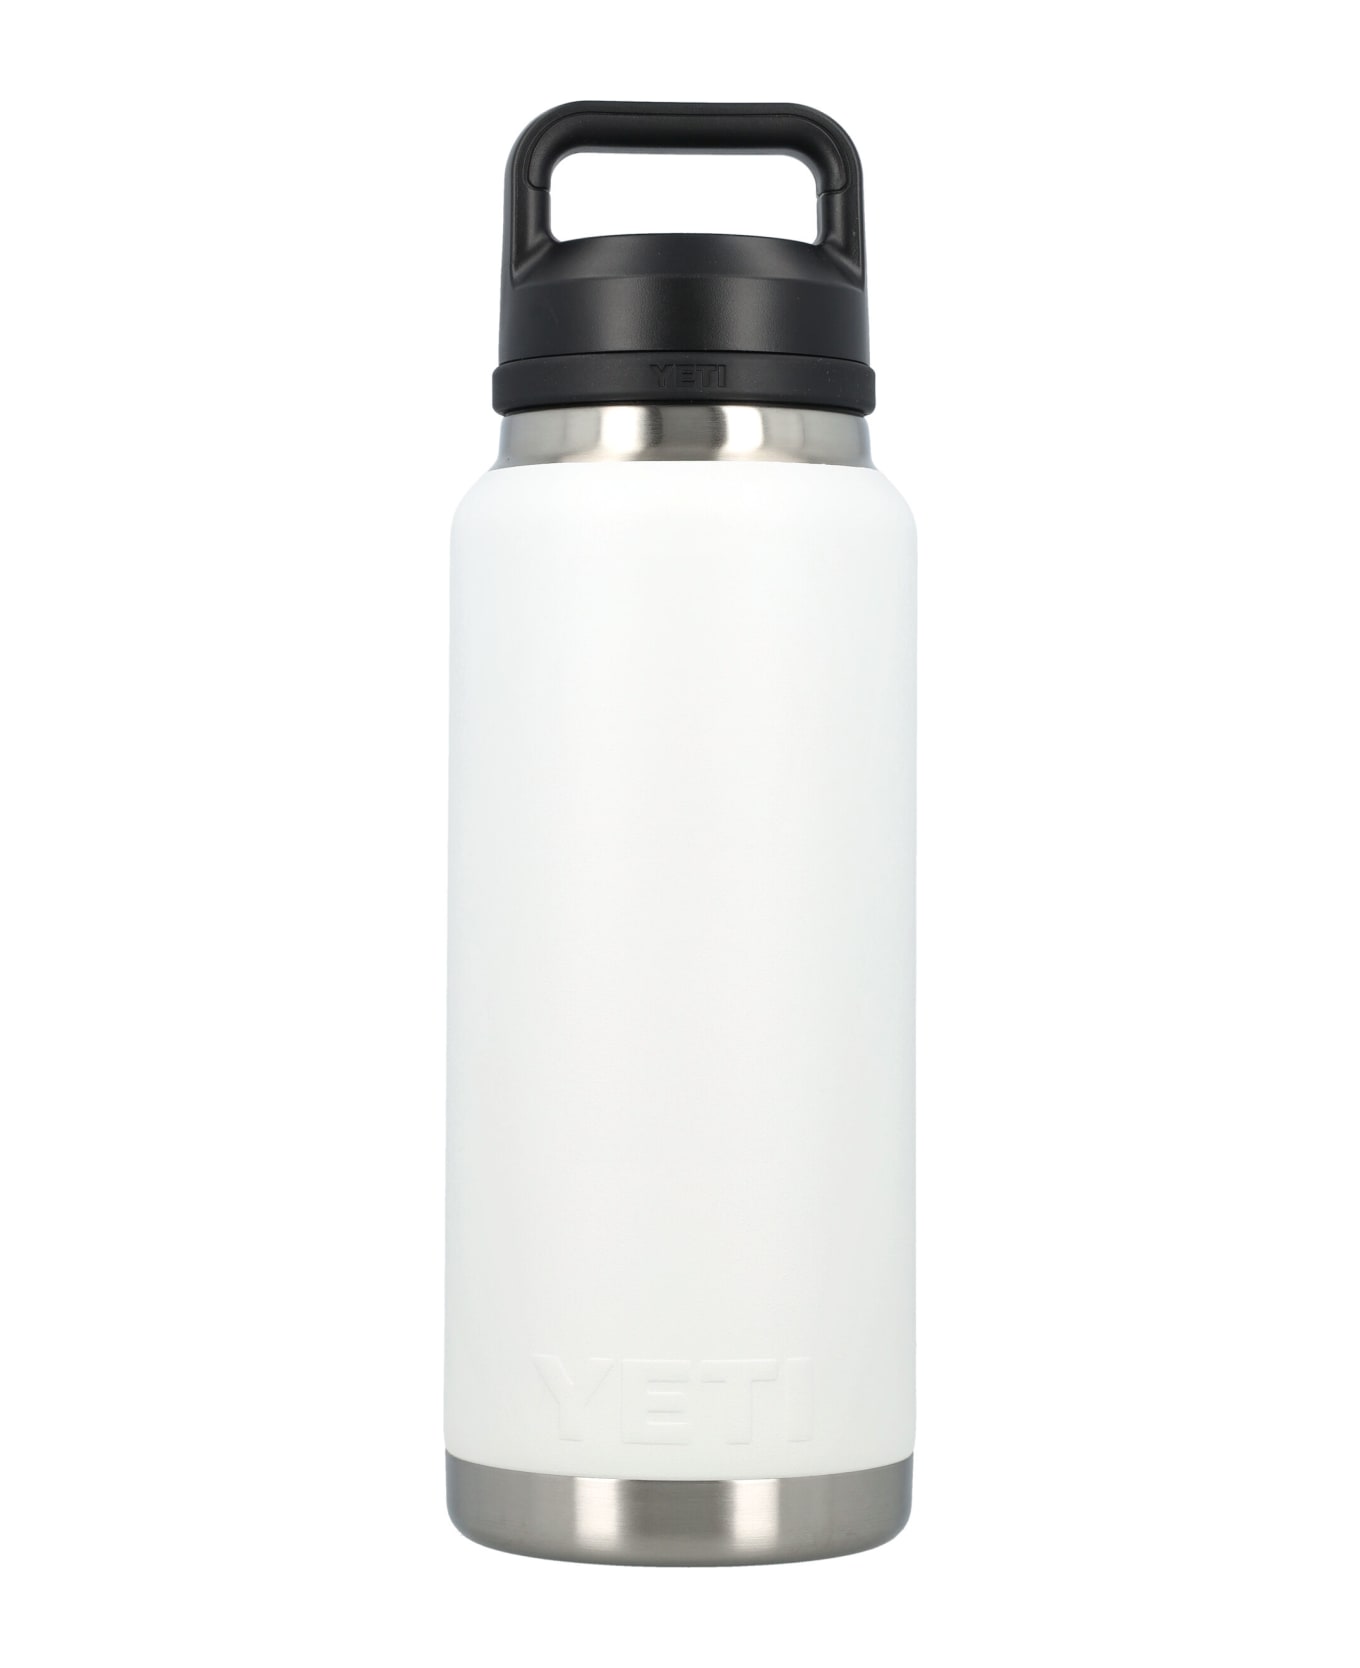 Yeti 36 Oz Water Bottle - WHITE